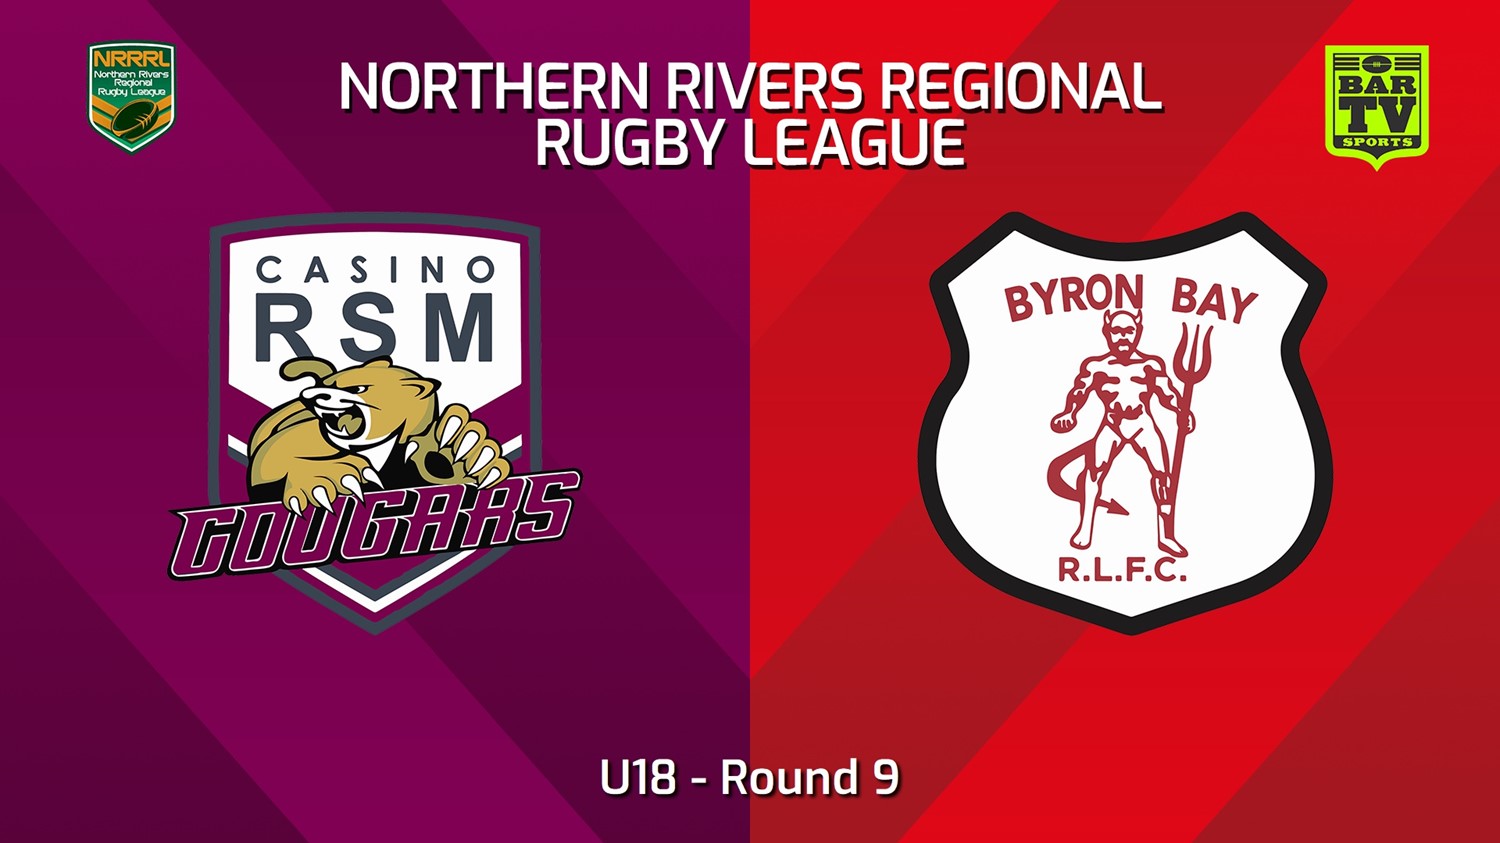 240602-video-Northern Rivers Round 9 - U18 - Casino RSM Cougars v Byron Bay Red Devils Slate Image